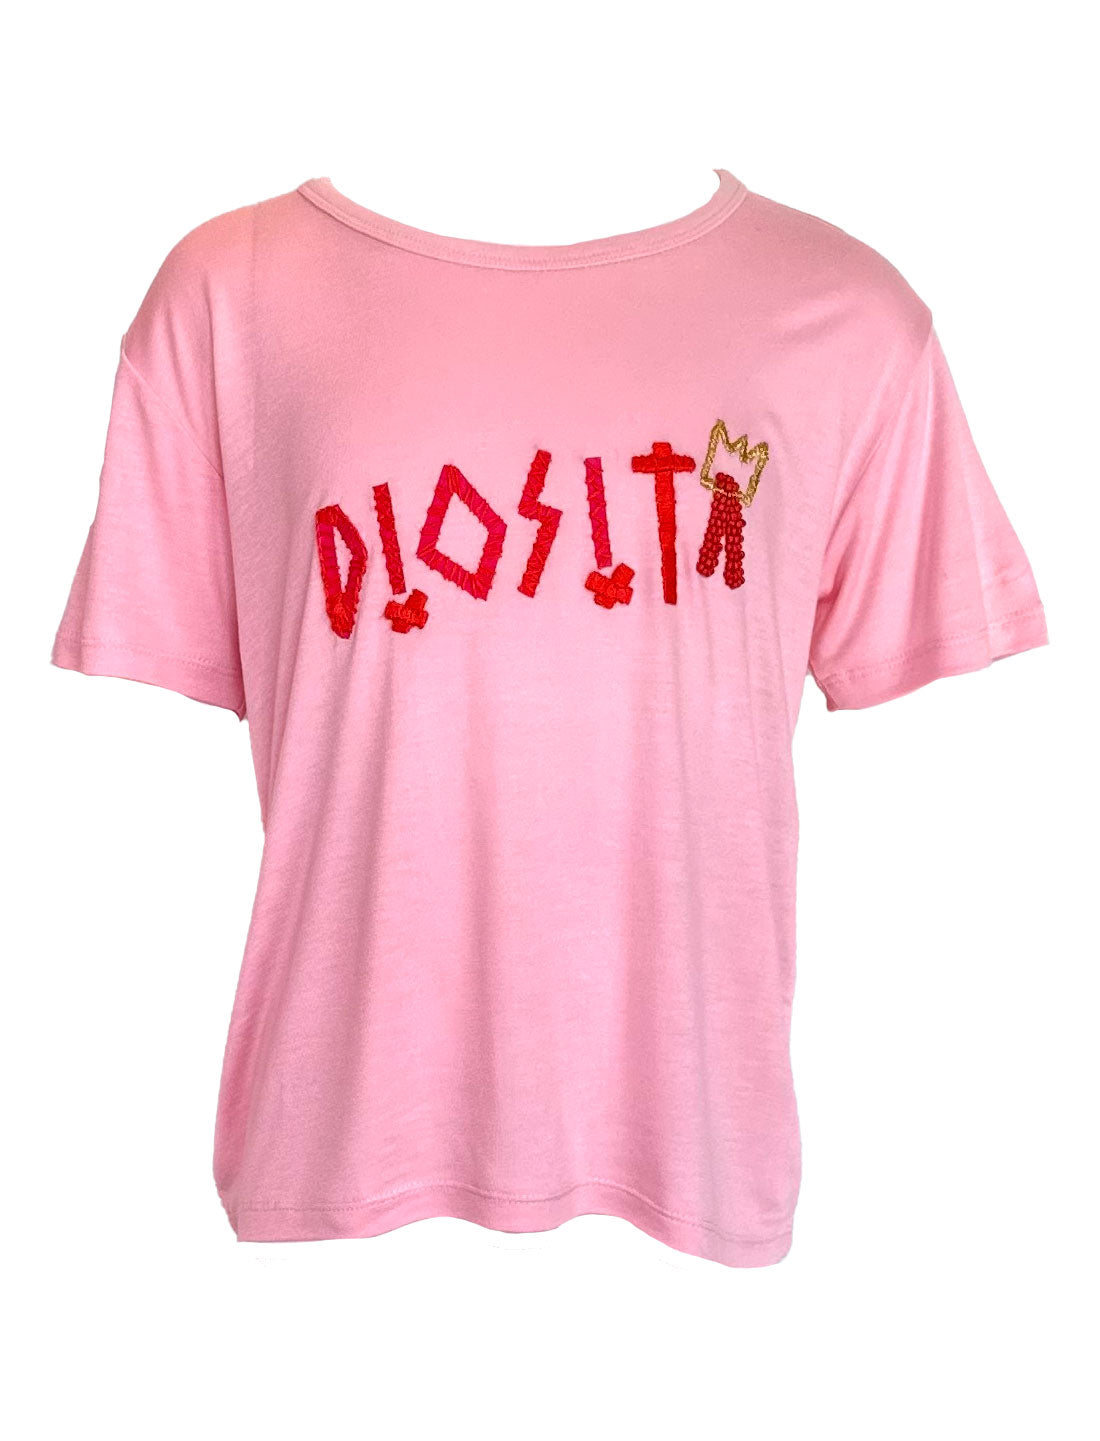 Diosita Kids Tee Shirt